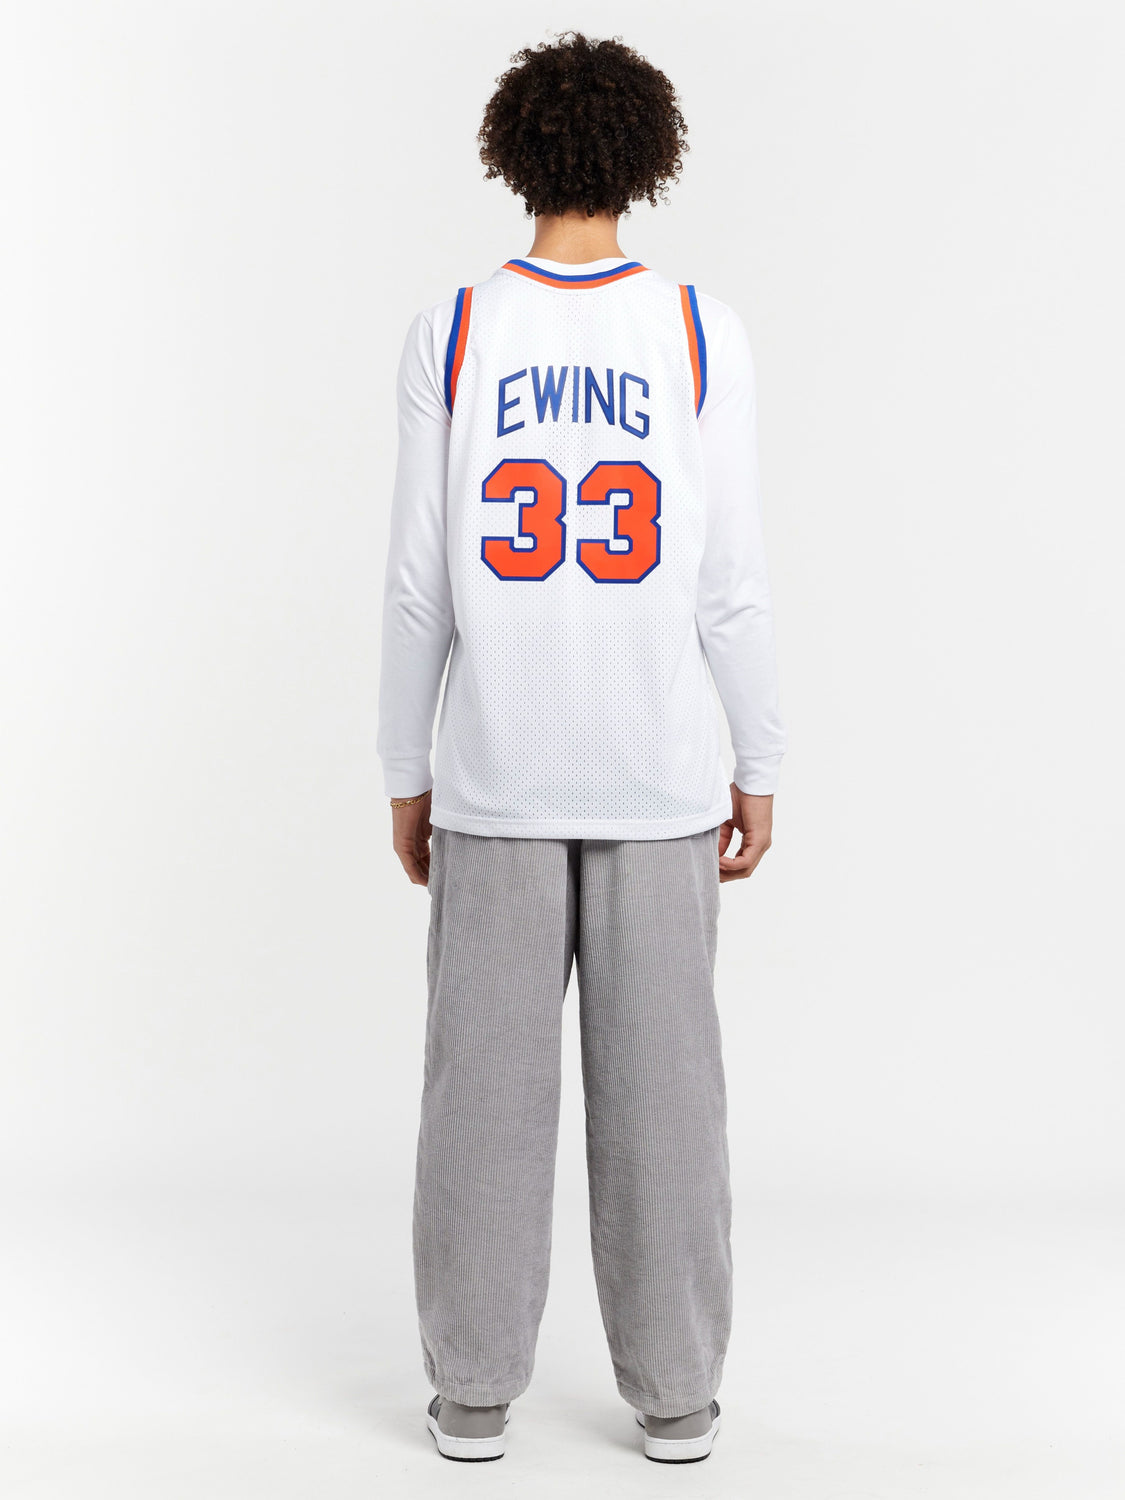 Nate Robinson Signed New York Knicks Mitchell & Ness Style Jersey (Bec –